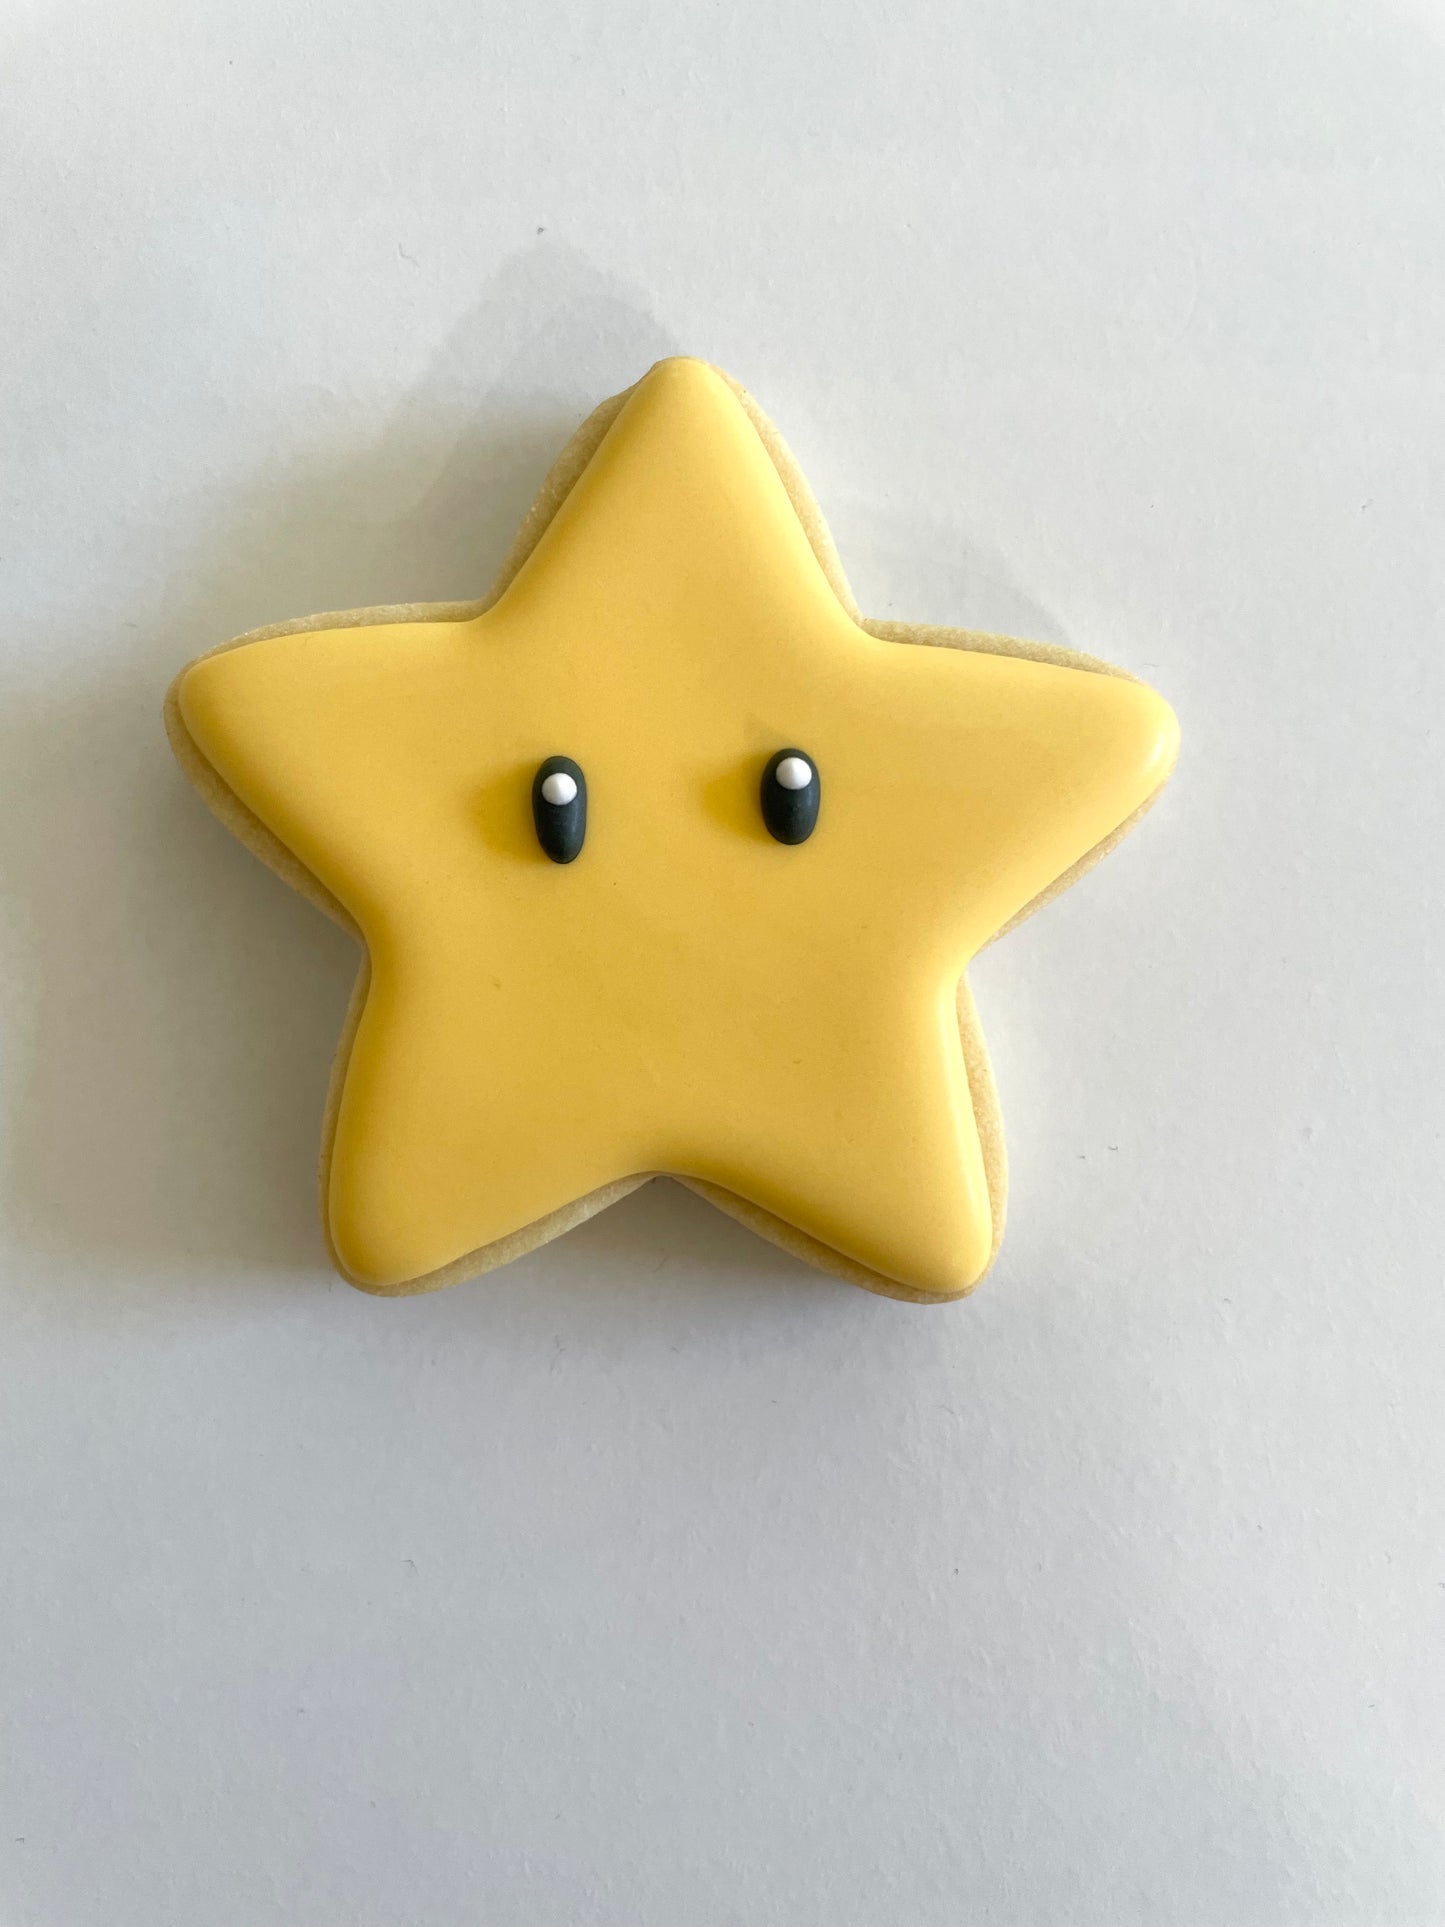 Super Mario star cookie